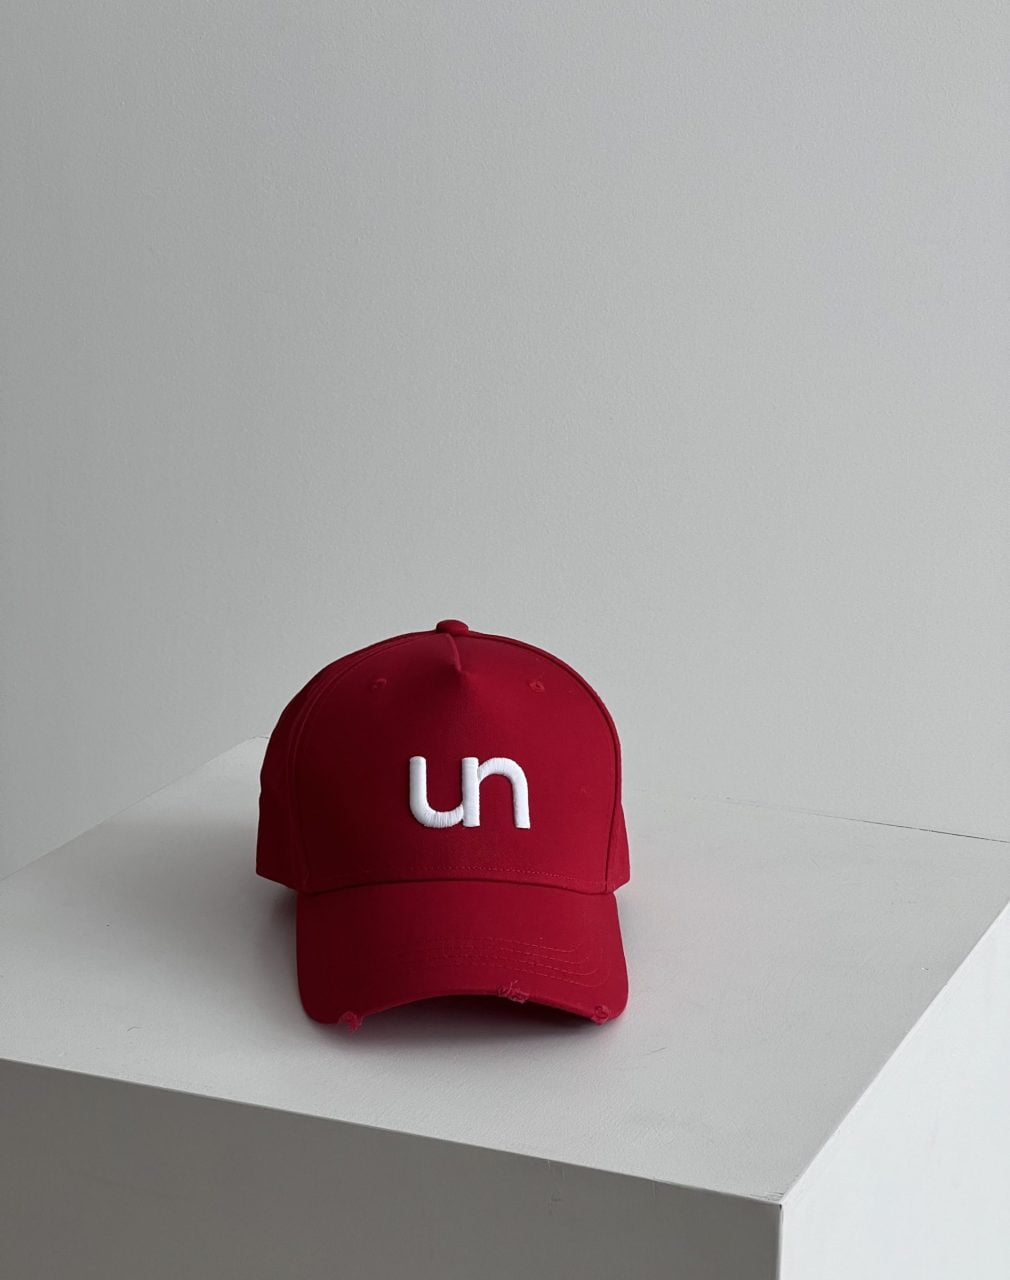 raudona kepurė su baltu un logotipu | unlabel